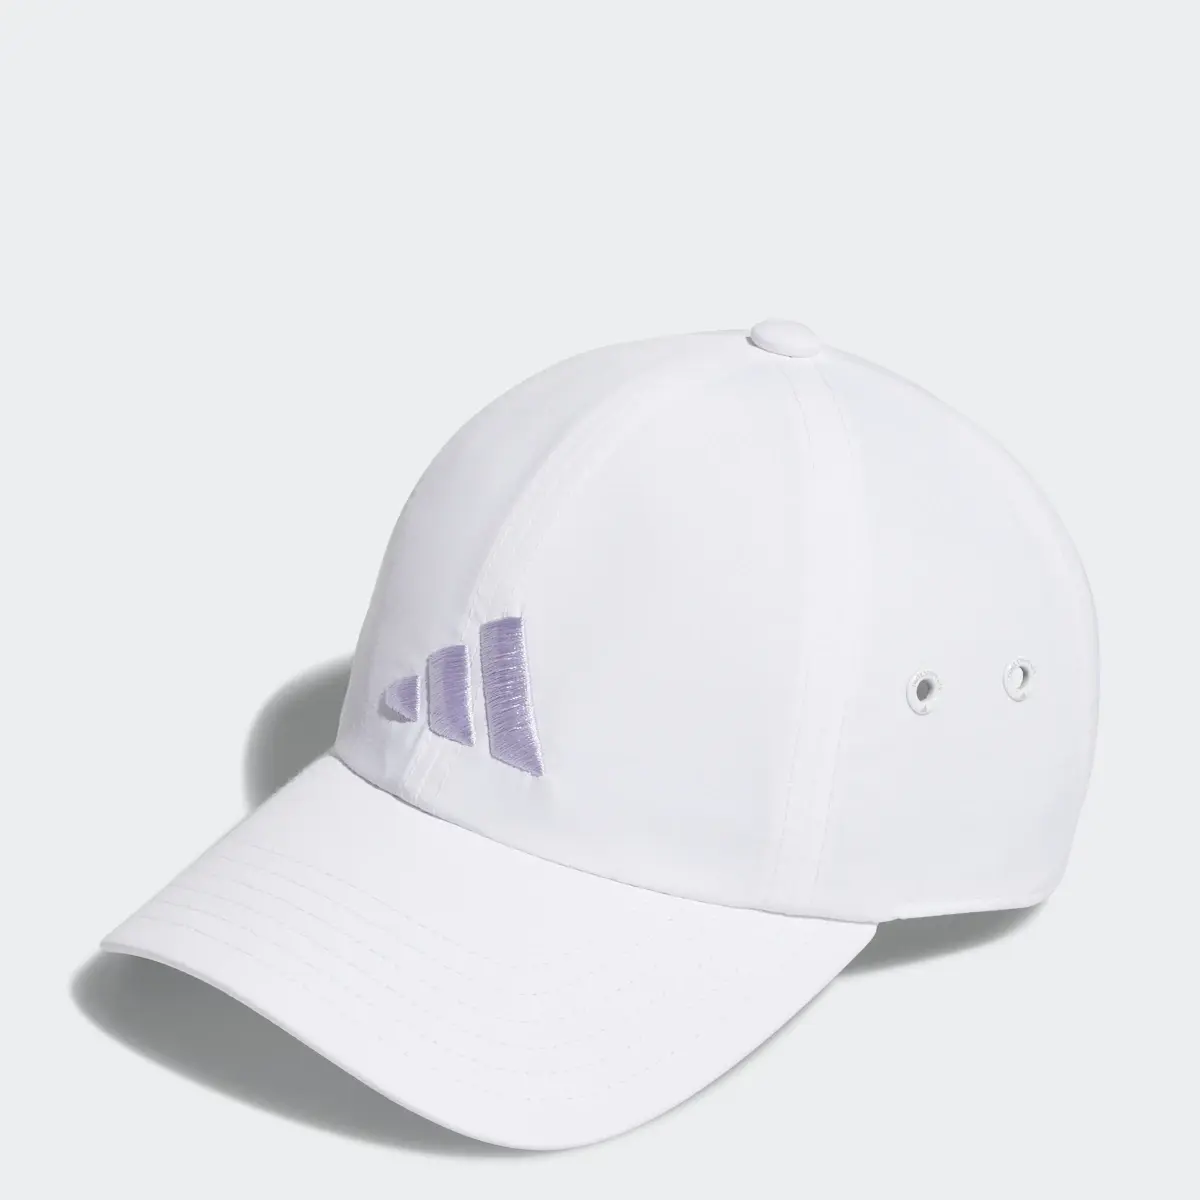 Adidas Influencer 3 Hat. 1